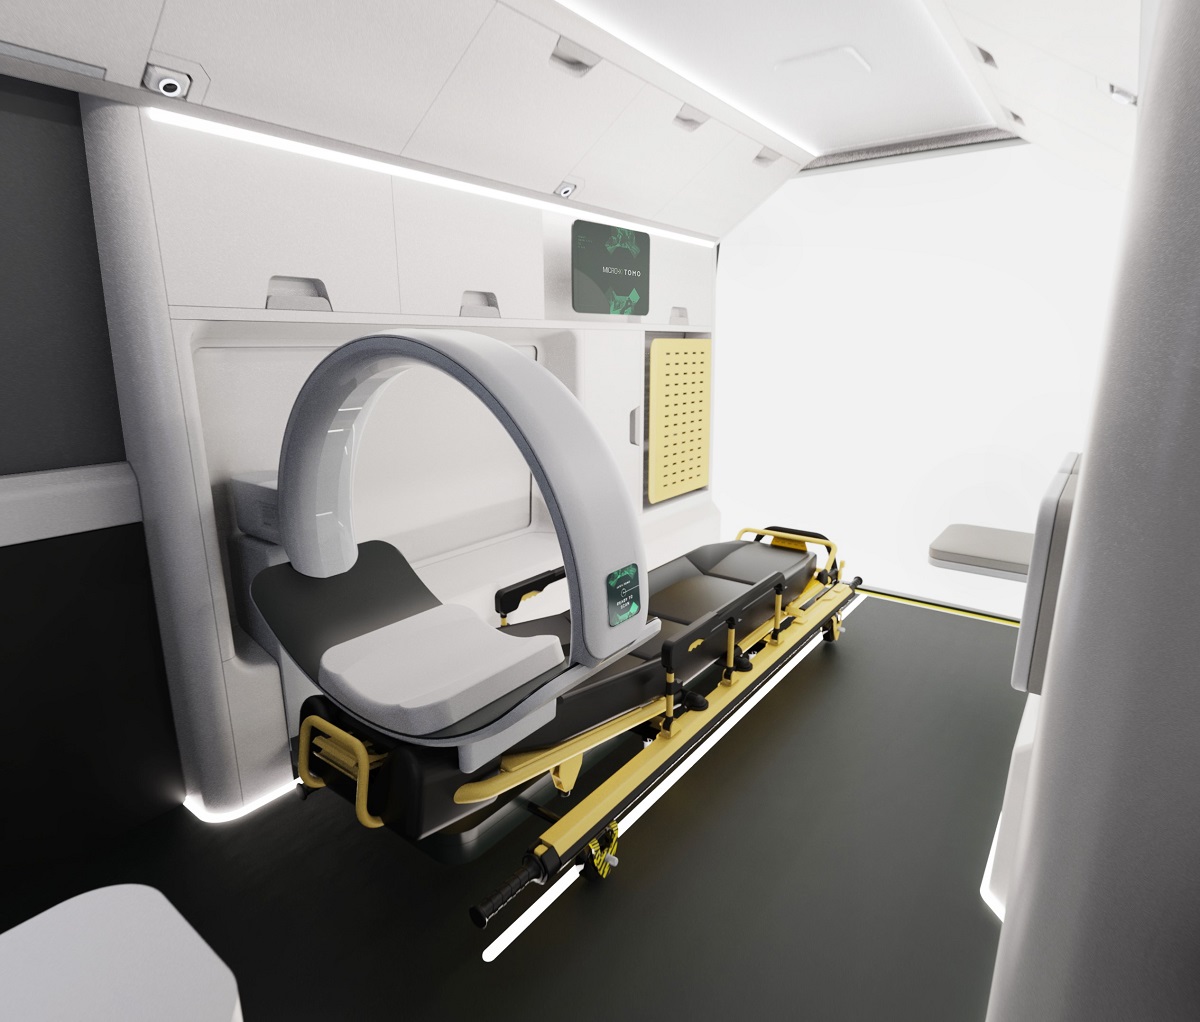 Micro-X CT Brain Scanner inside Ambulance